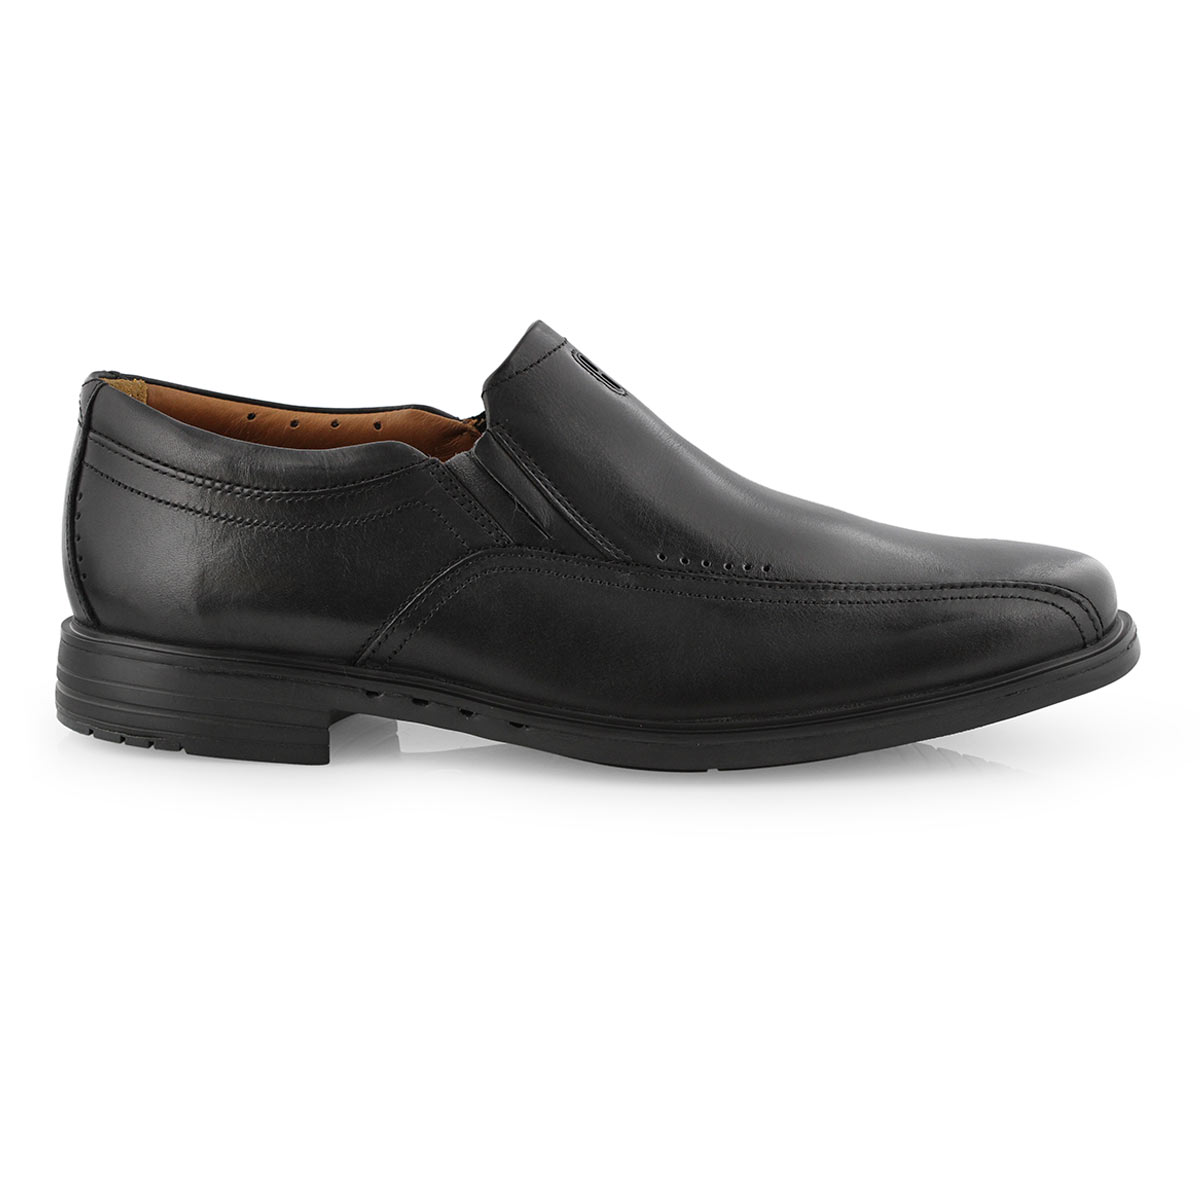 Clarks Men's UN SHERIDAN GO black dress shoes | SoftMoc.com